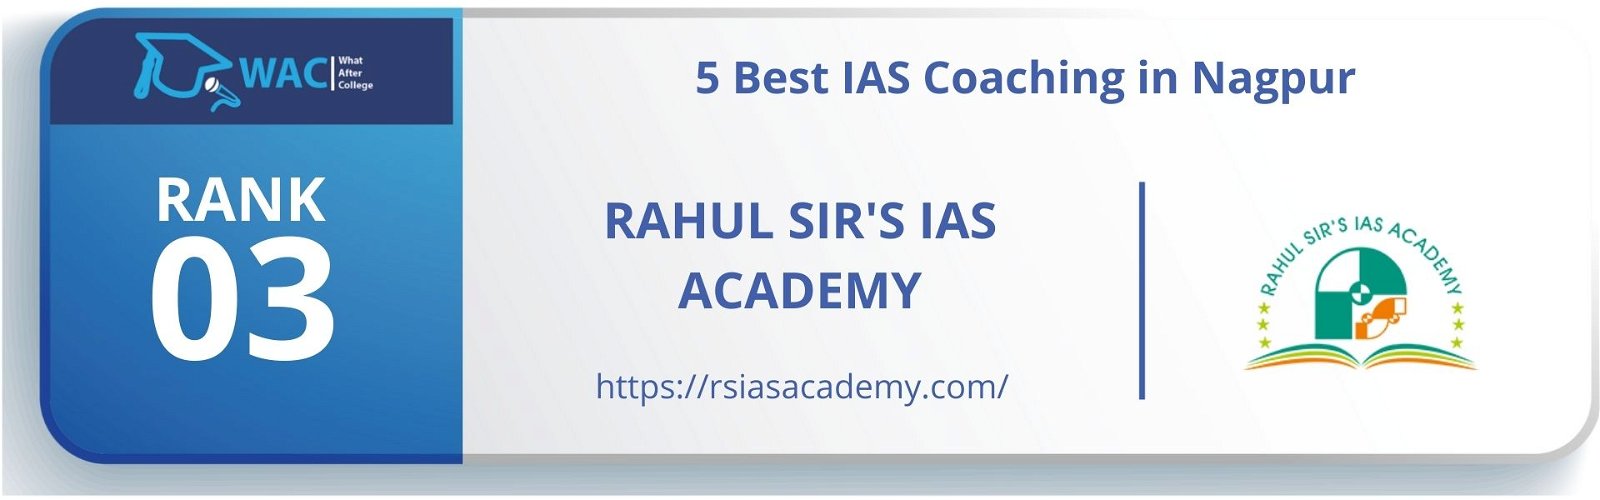 5 Best IAS Coaching in Nagpur Rank 3: Rahul Sir's IAS Academy in nagpur